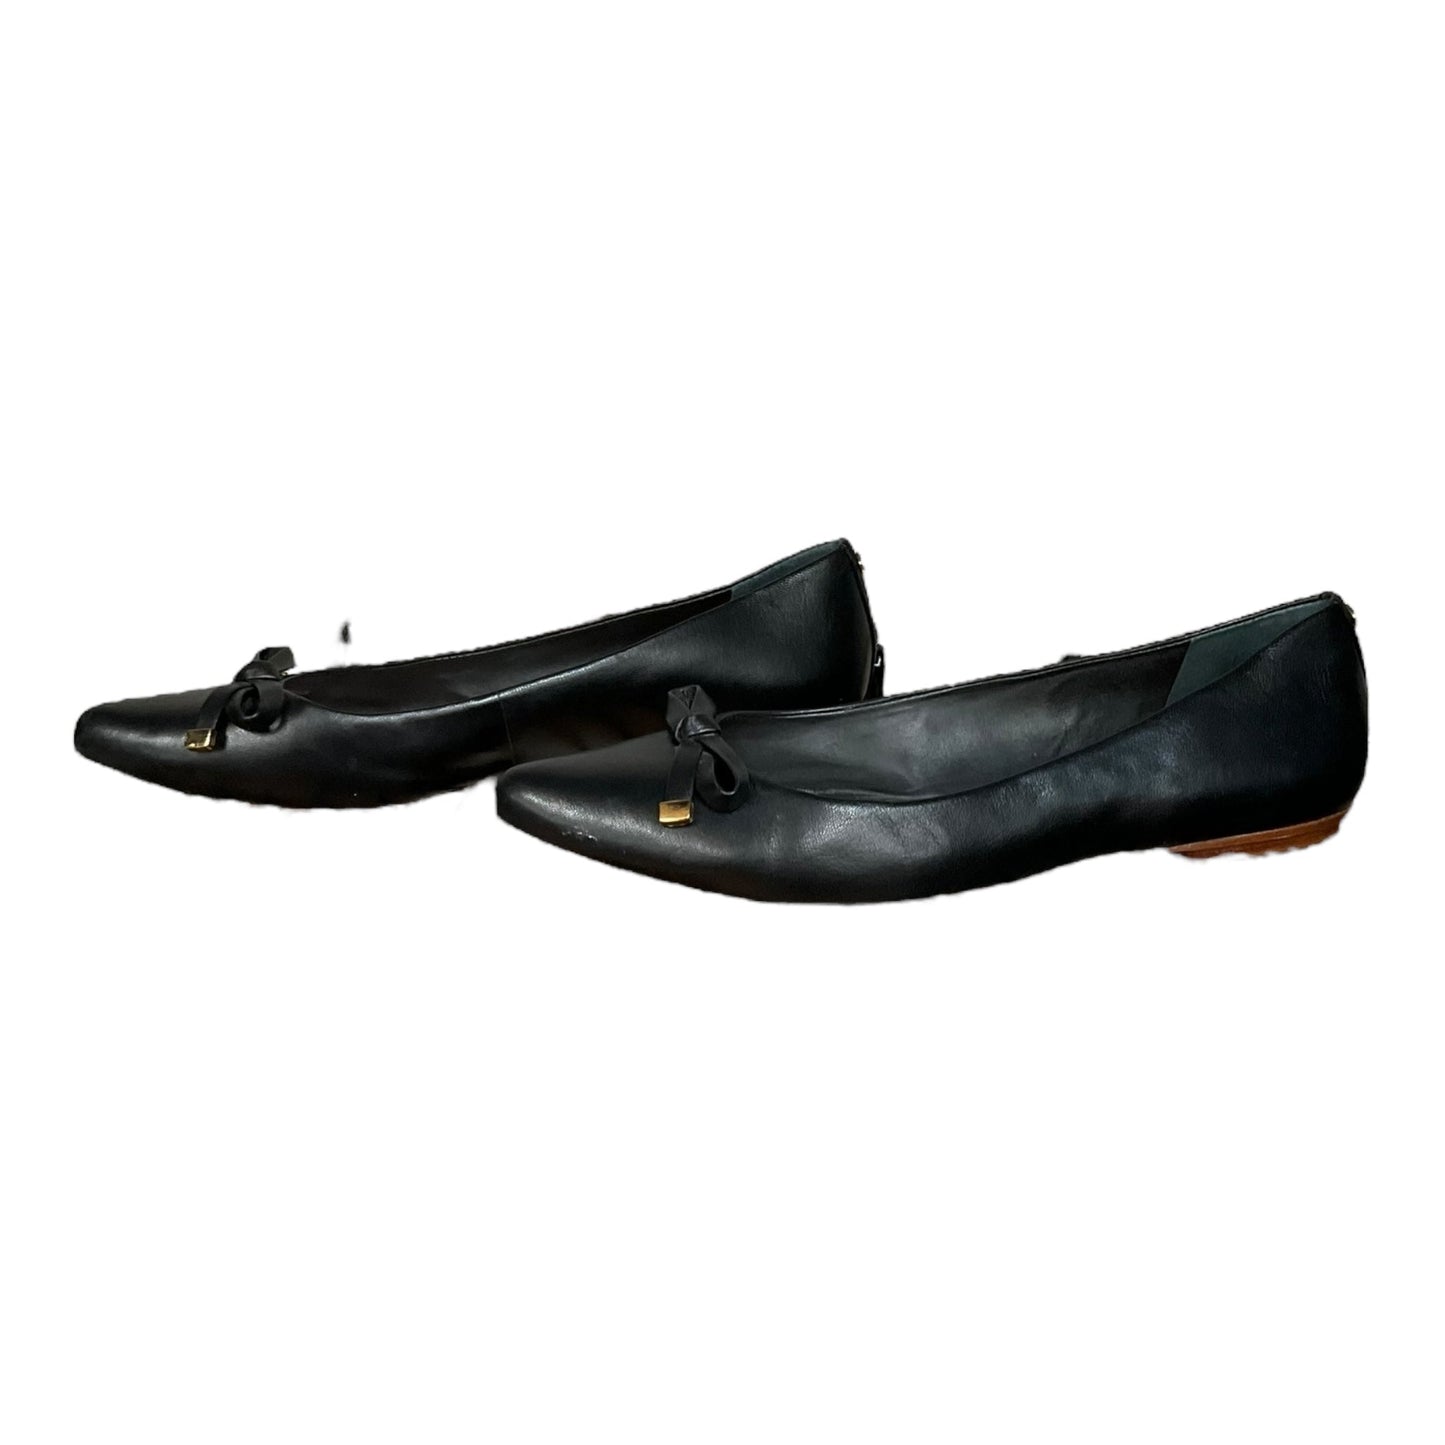 Black Shoes Flats Kate Spade, Size 10